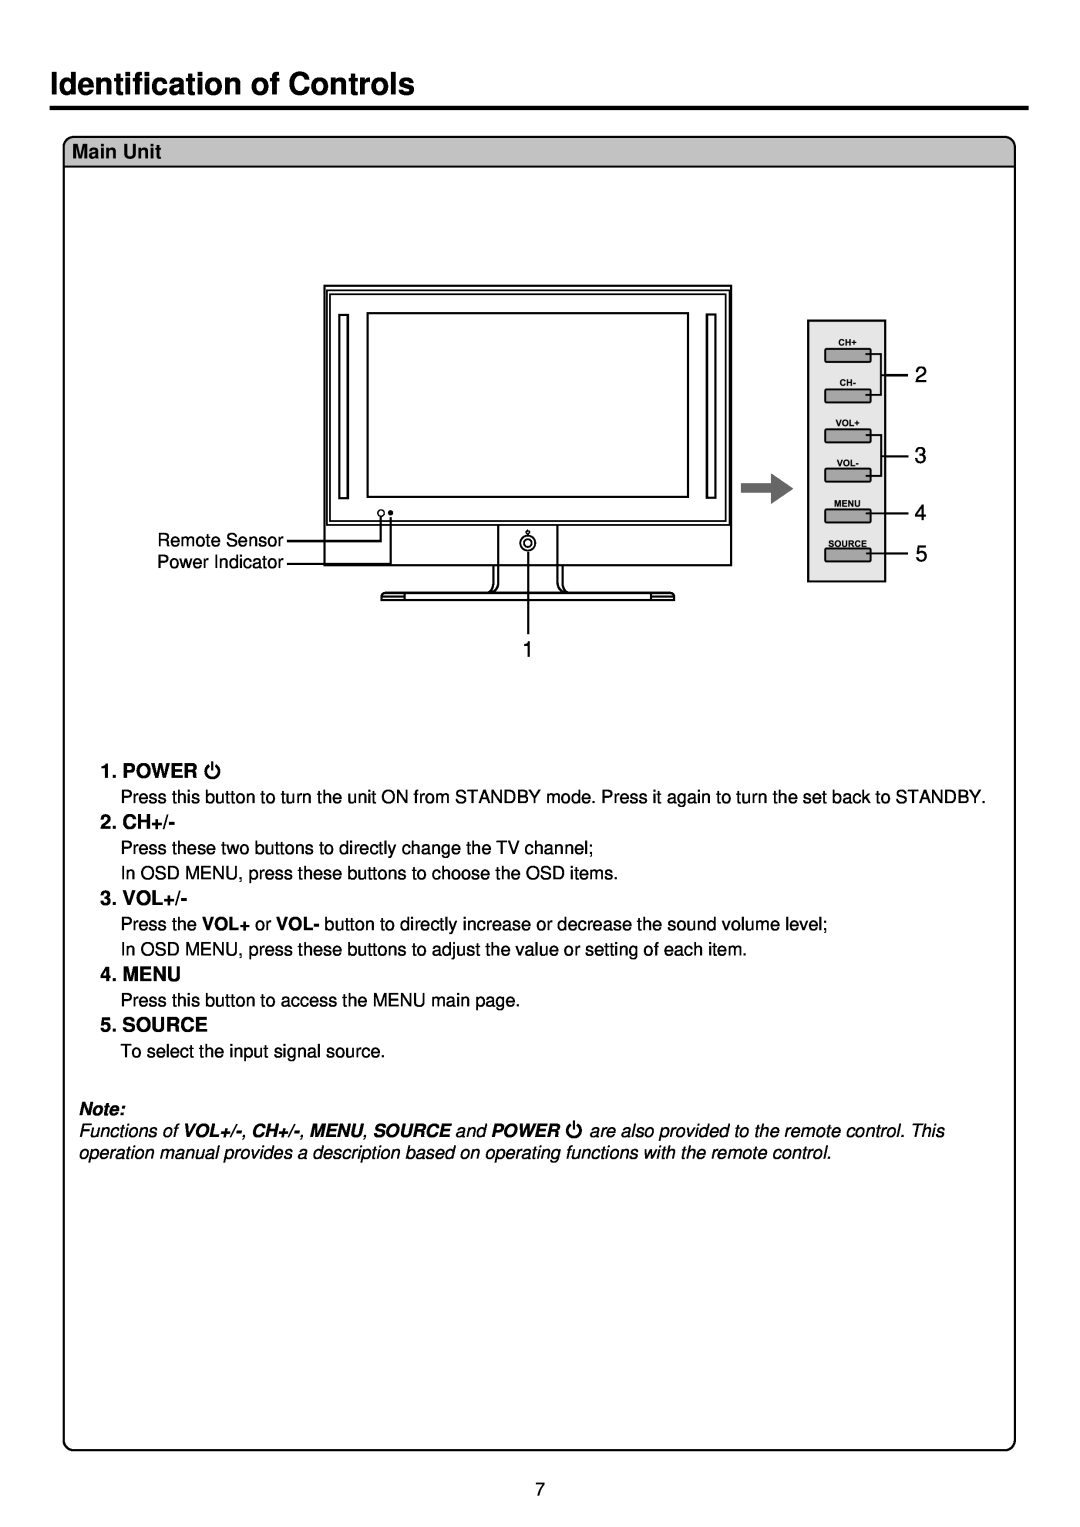 Palsonic TFTV525WS owner manual Identification of Controls, Main Unit, Power, 2. CH+, Vol+, Menu, Source 